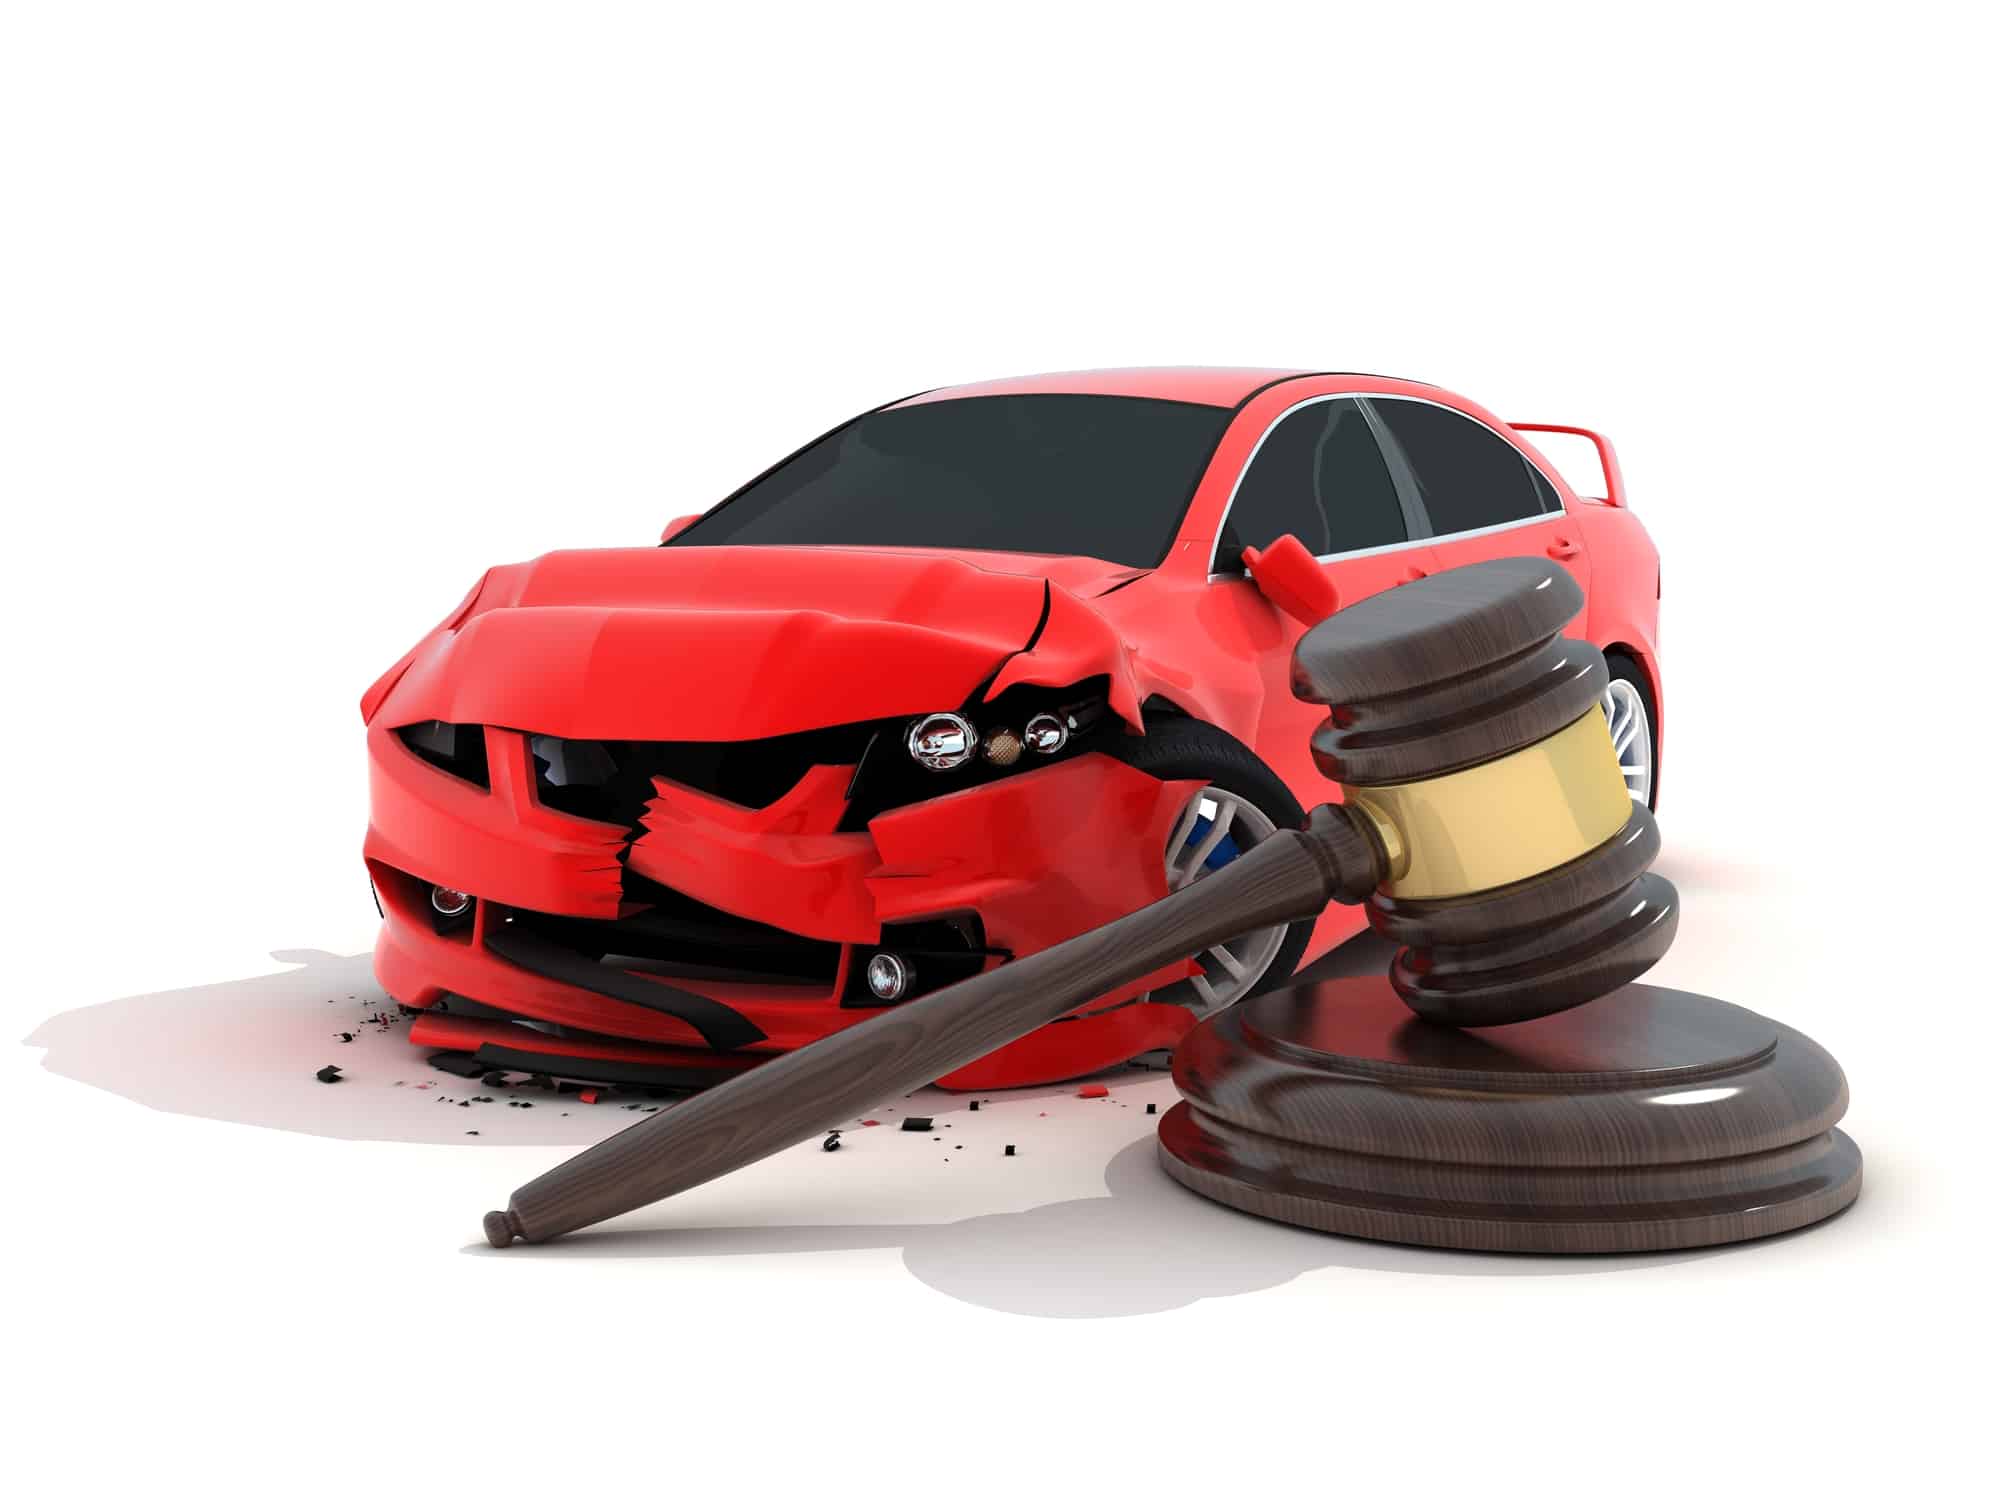 Car crash law